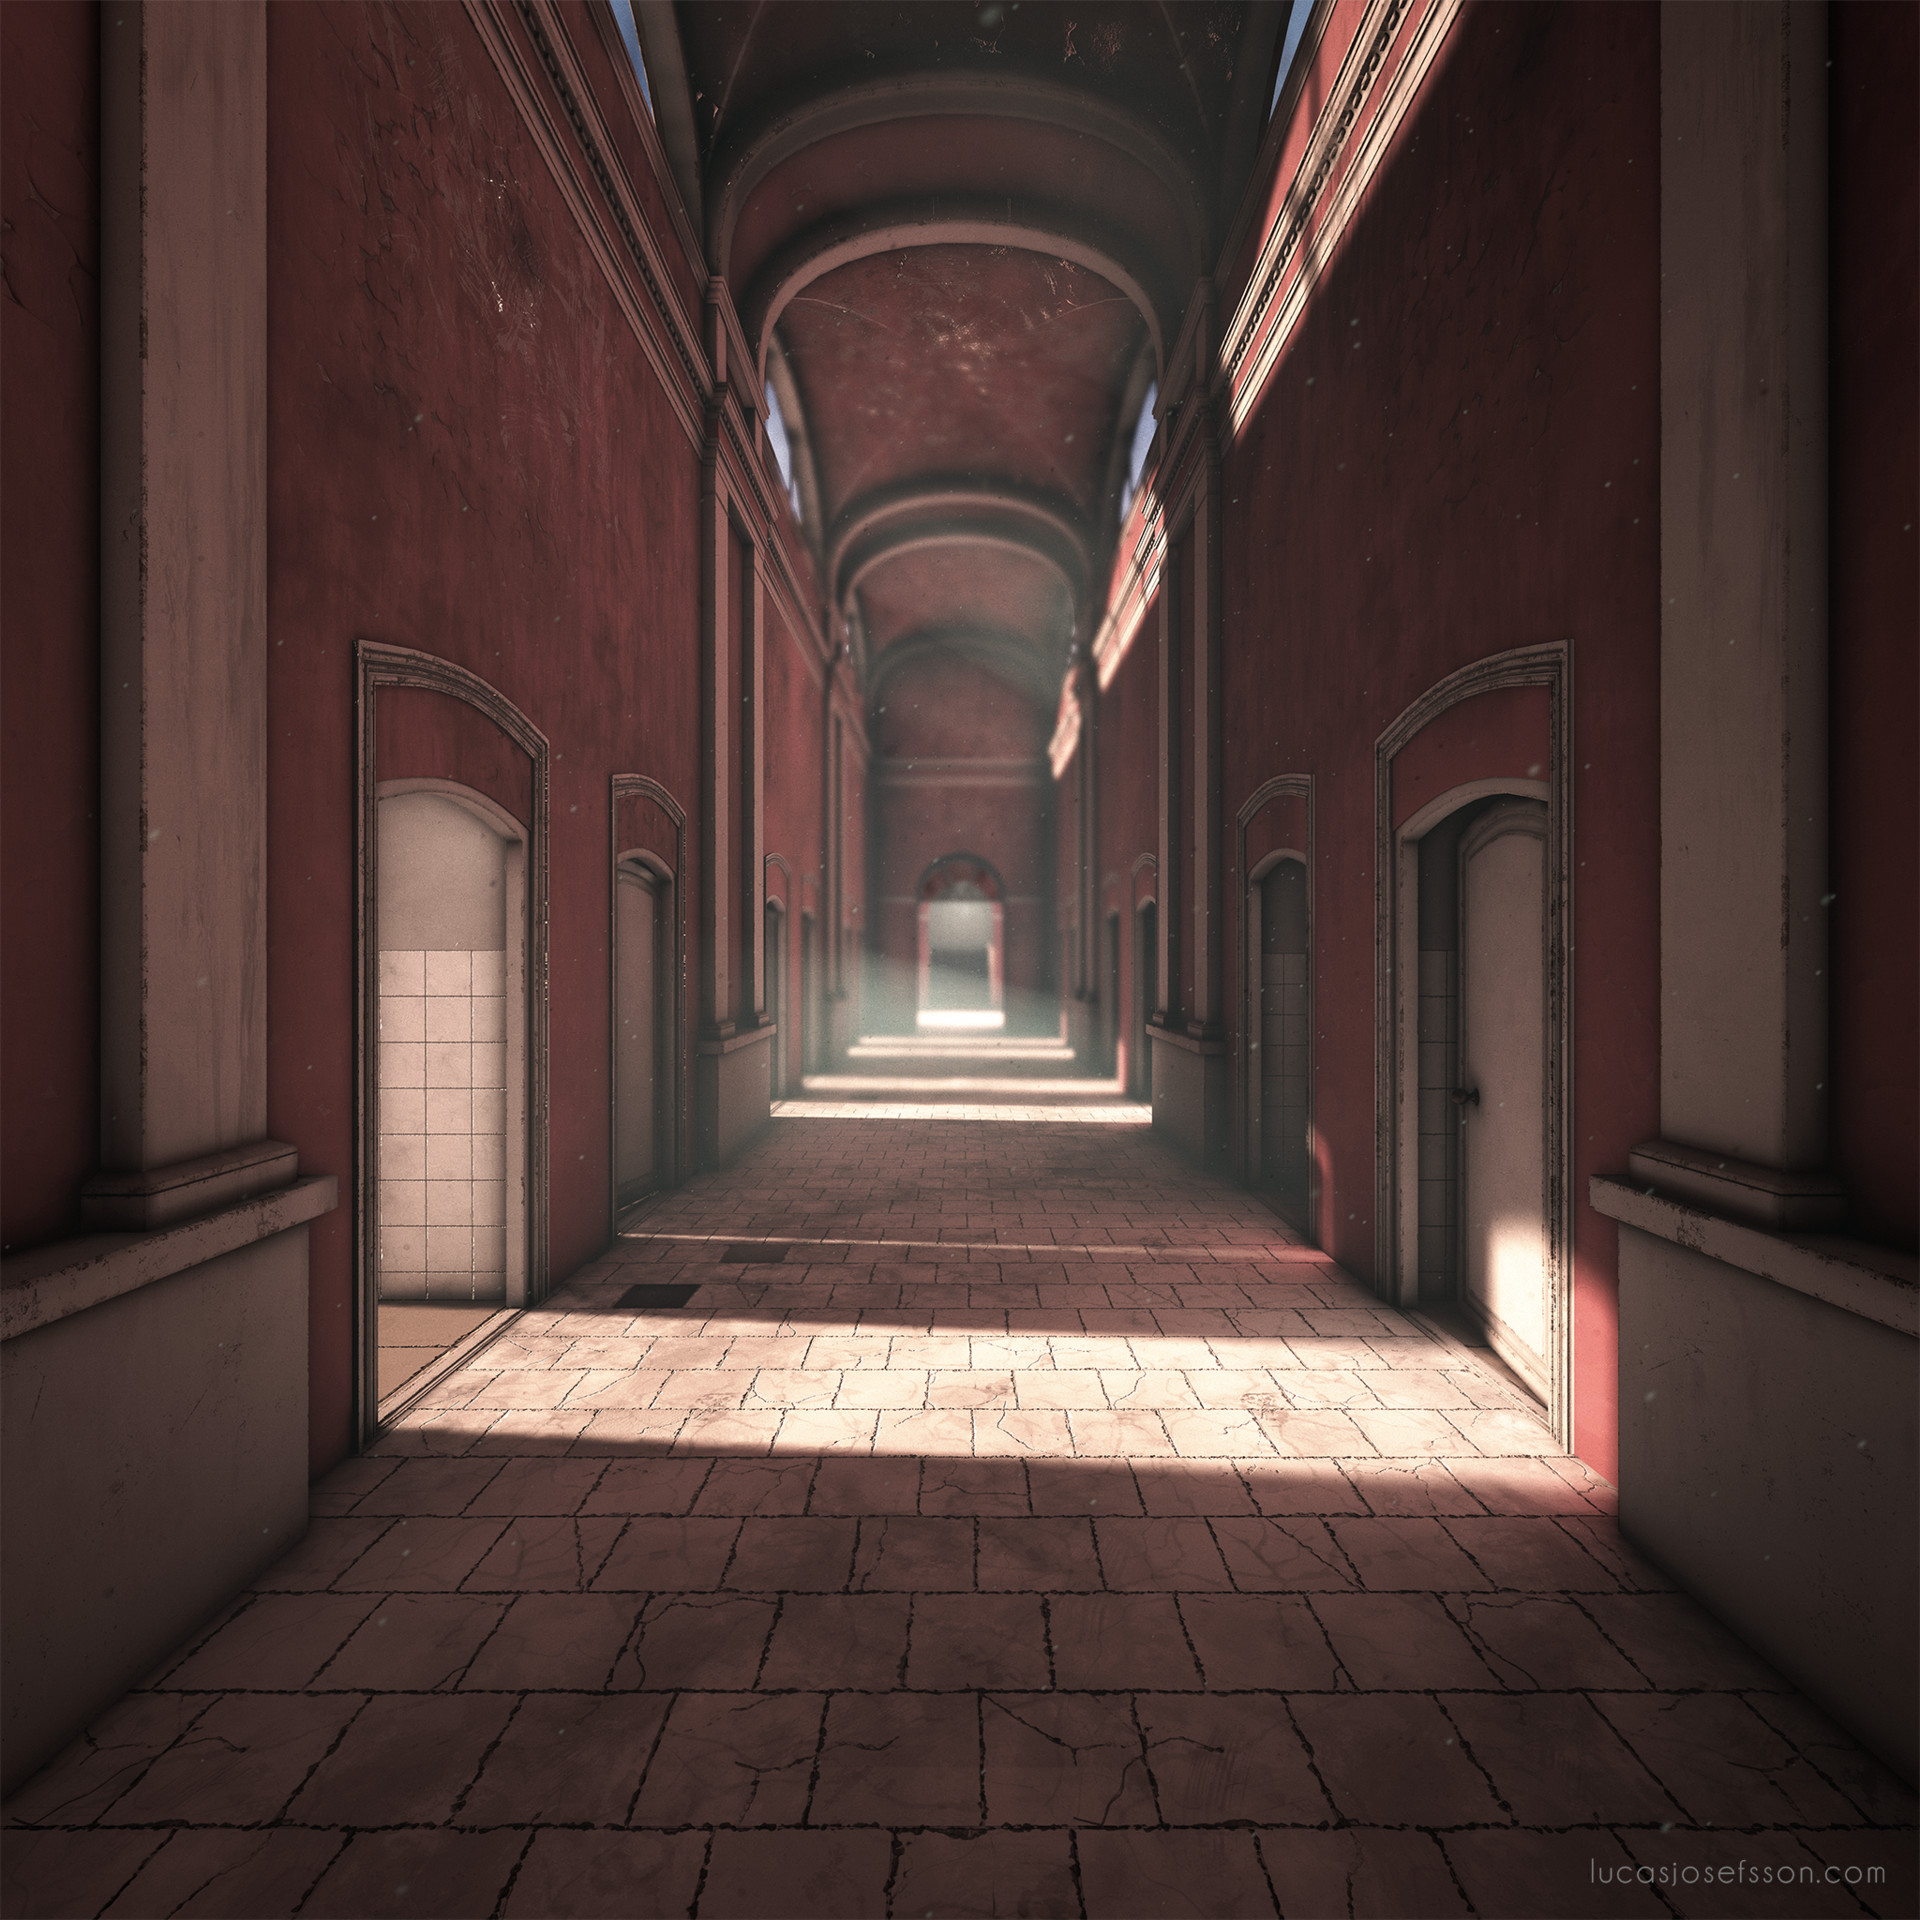 Lucas Josefsson - Abandoned Hallway